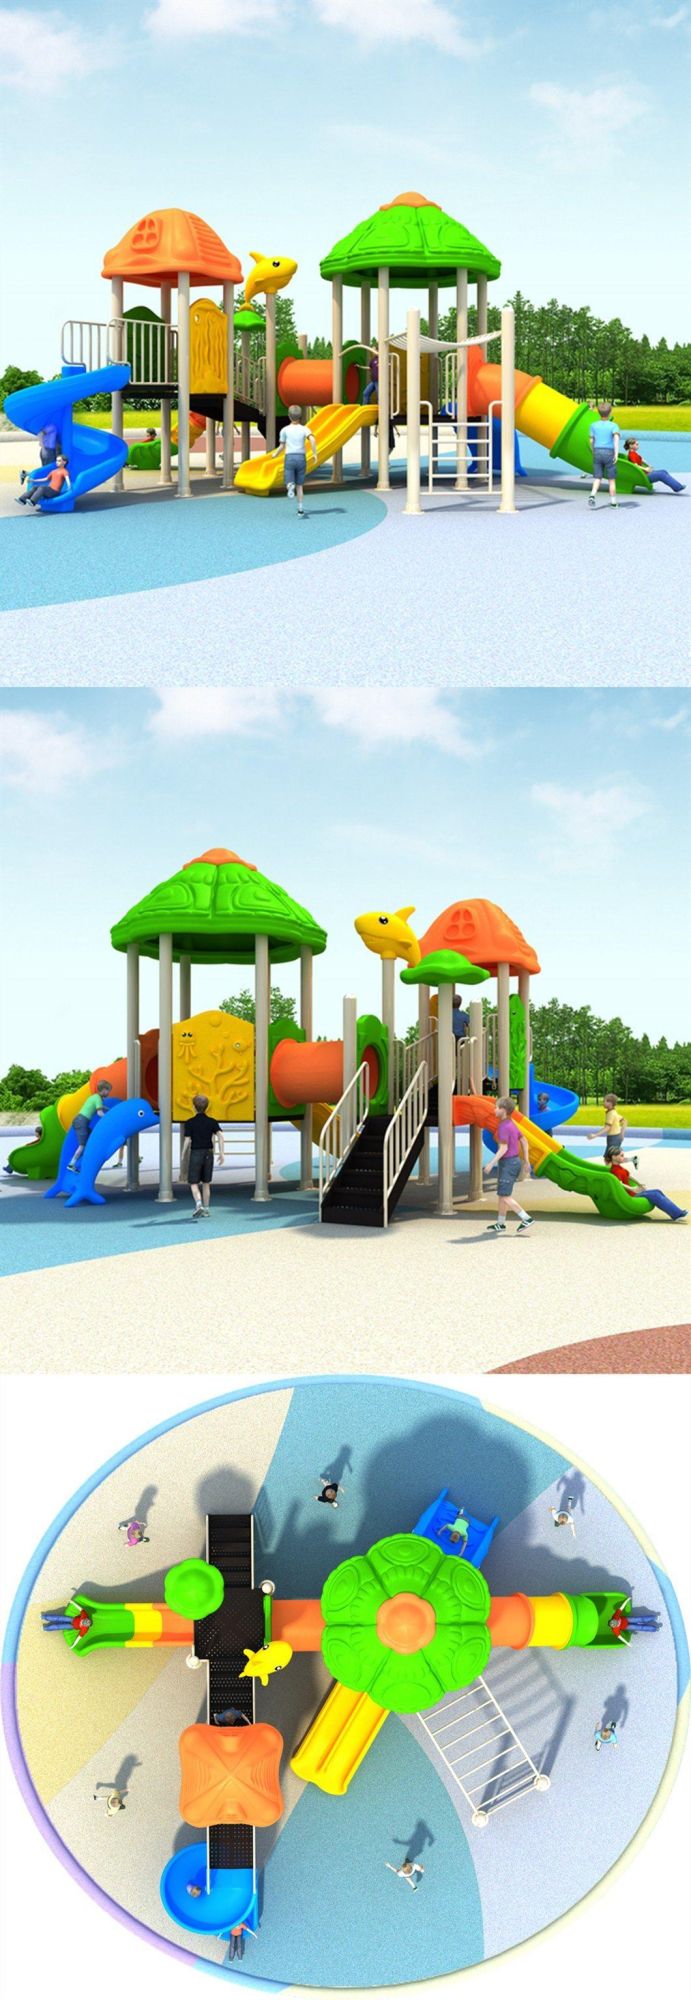 Community Outdoor Playground Plastic Slides Children′s Amusement Park Equipment 483b